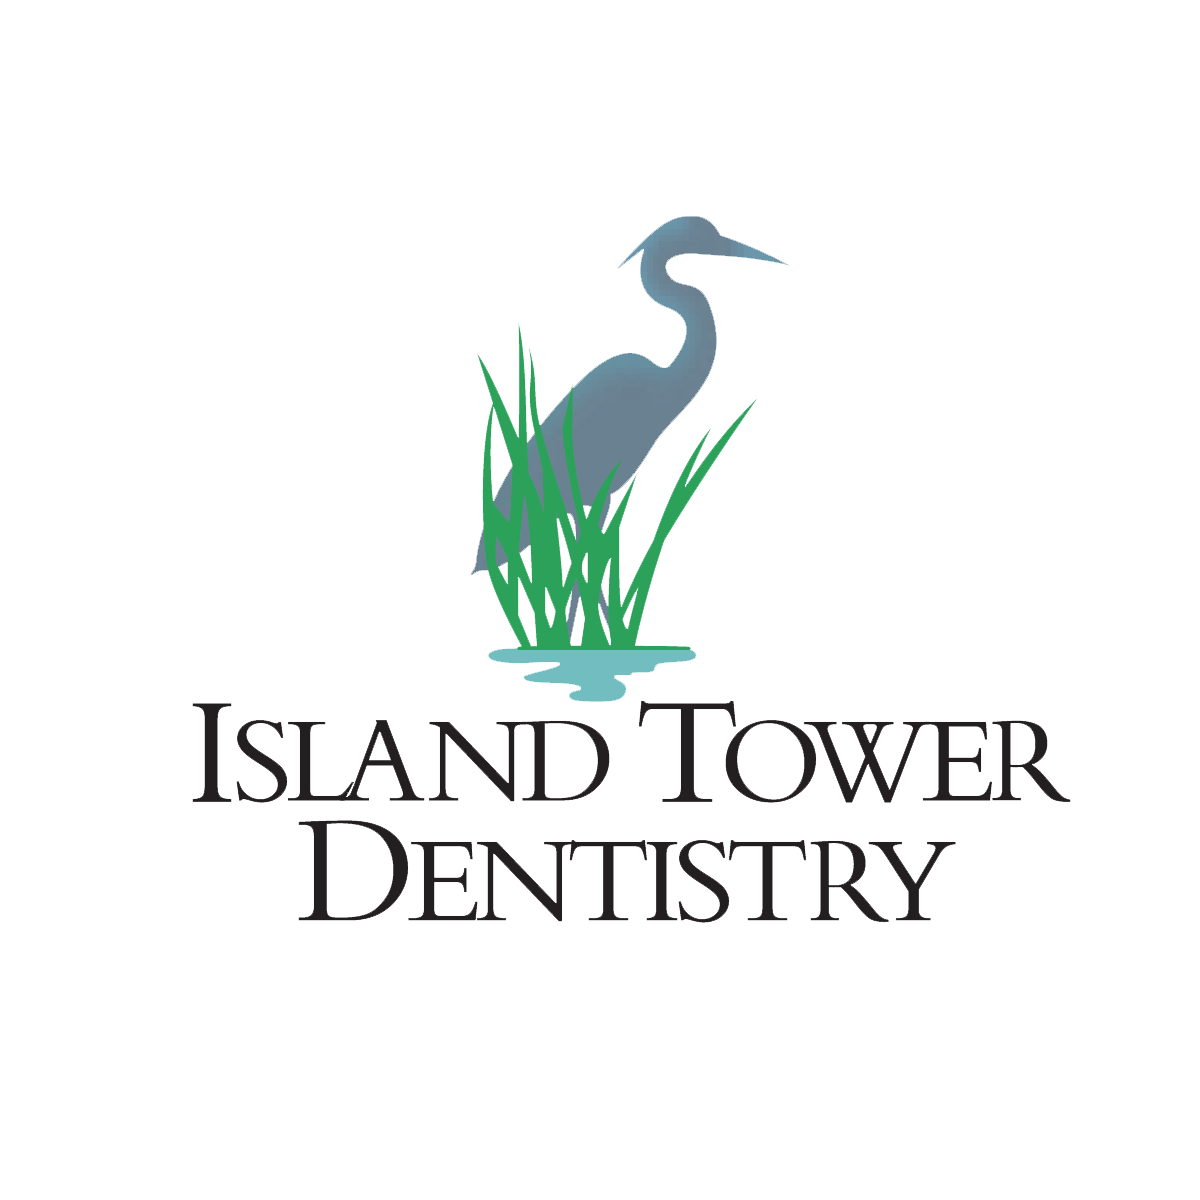 Island Tower Dentistry - Marco Island, FL 34145 - (239)394-1004 | ShowMeLocal.com